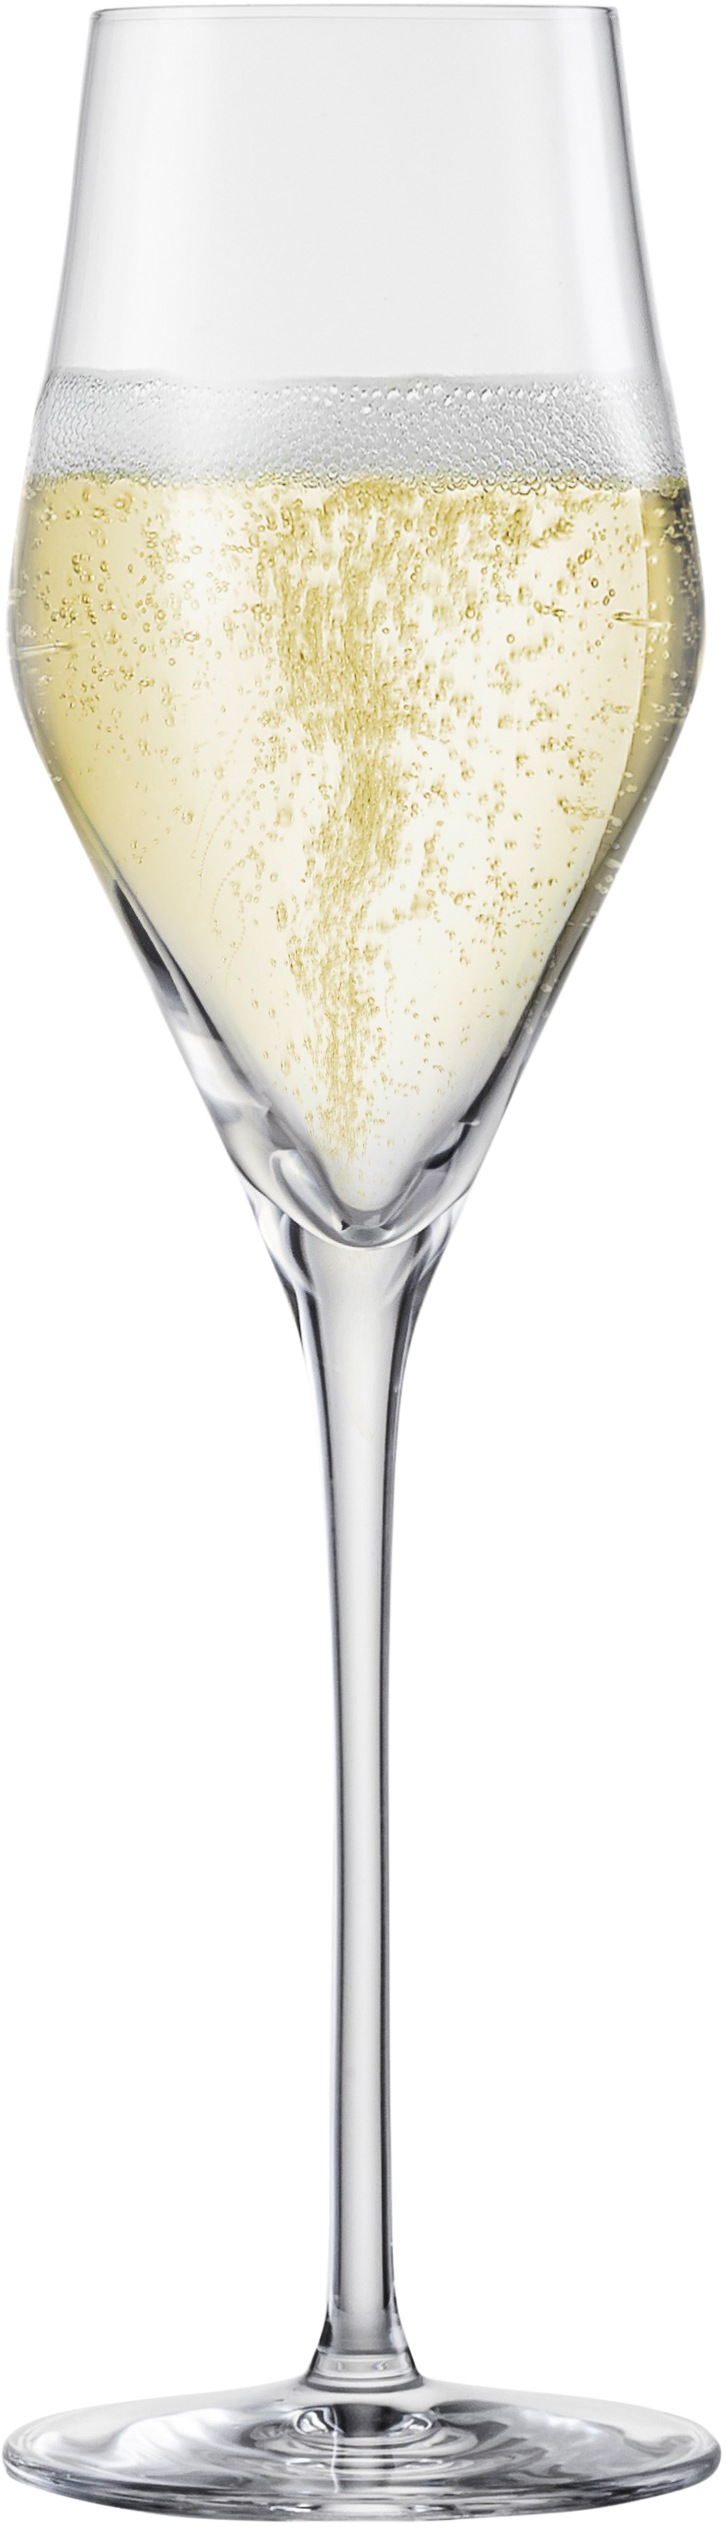 Eisch Champagnerglas »Sky SensisPlus«, (Set, 4 tlg.), bleifrei, 260 ml, 4-teilig